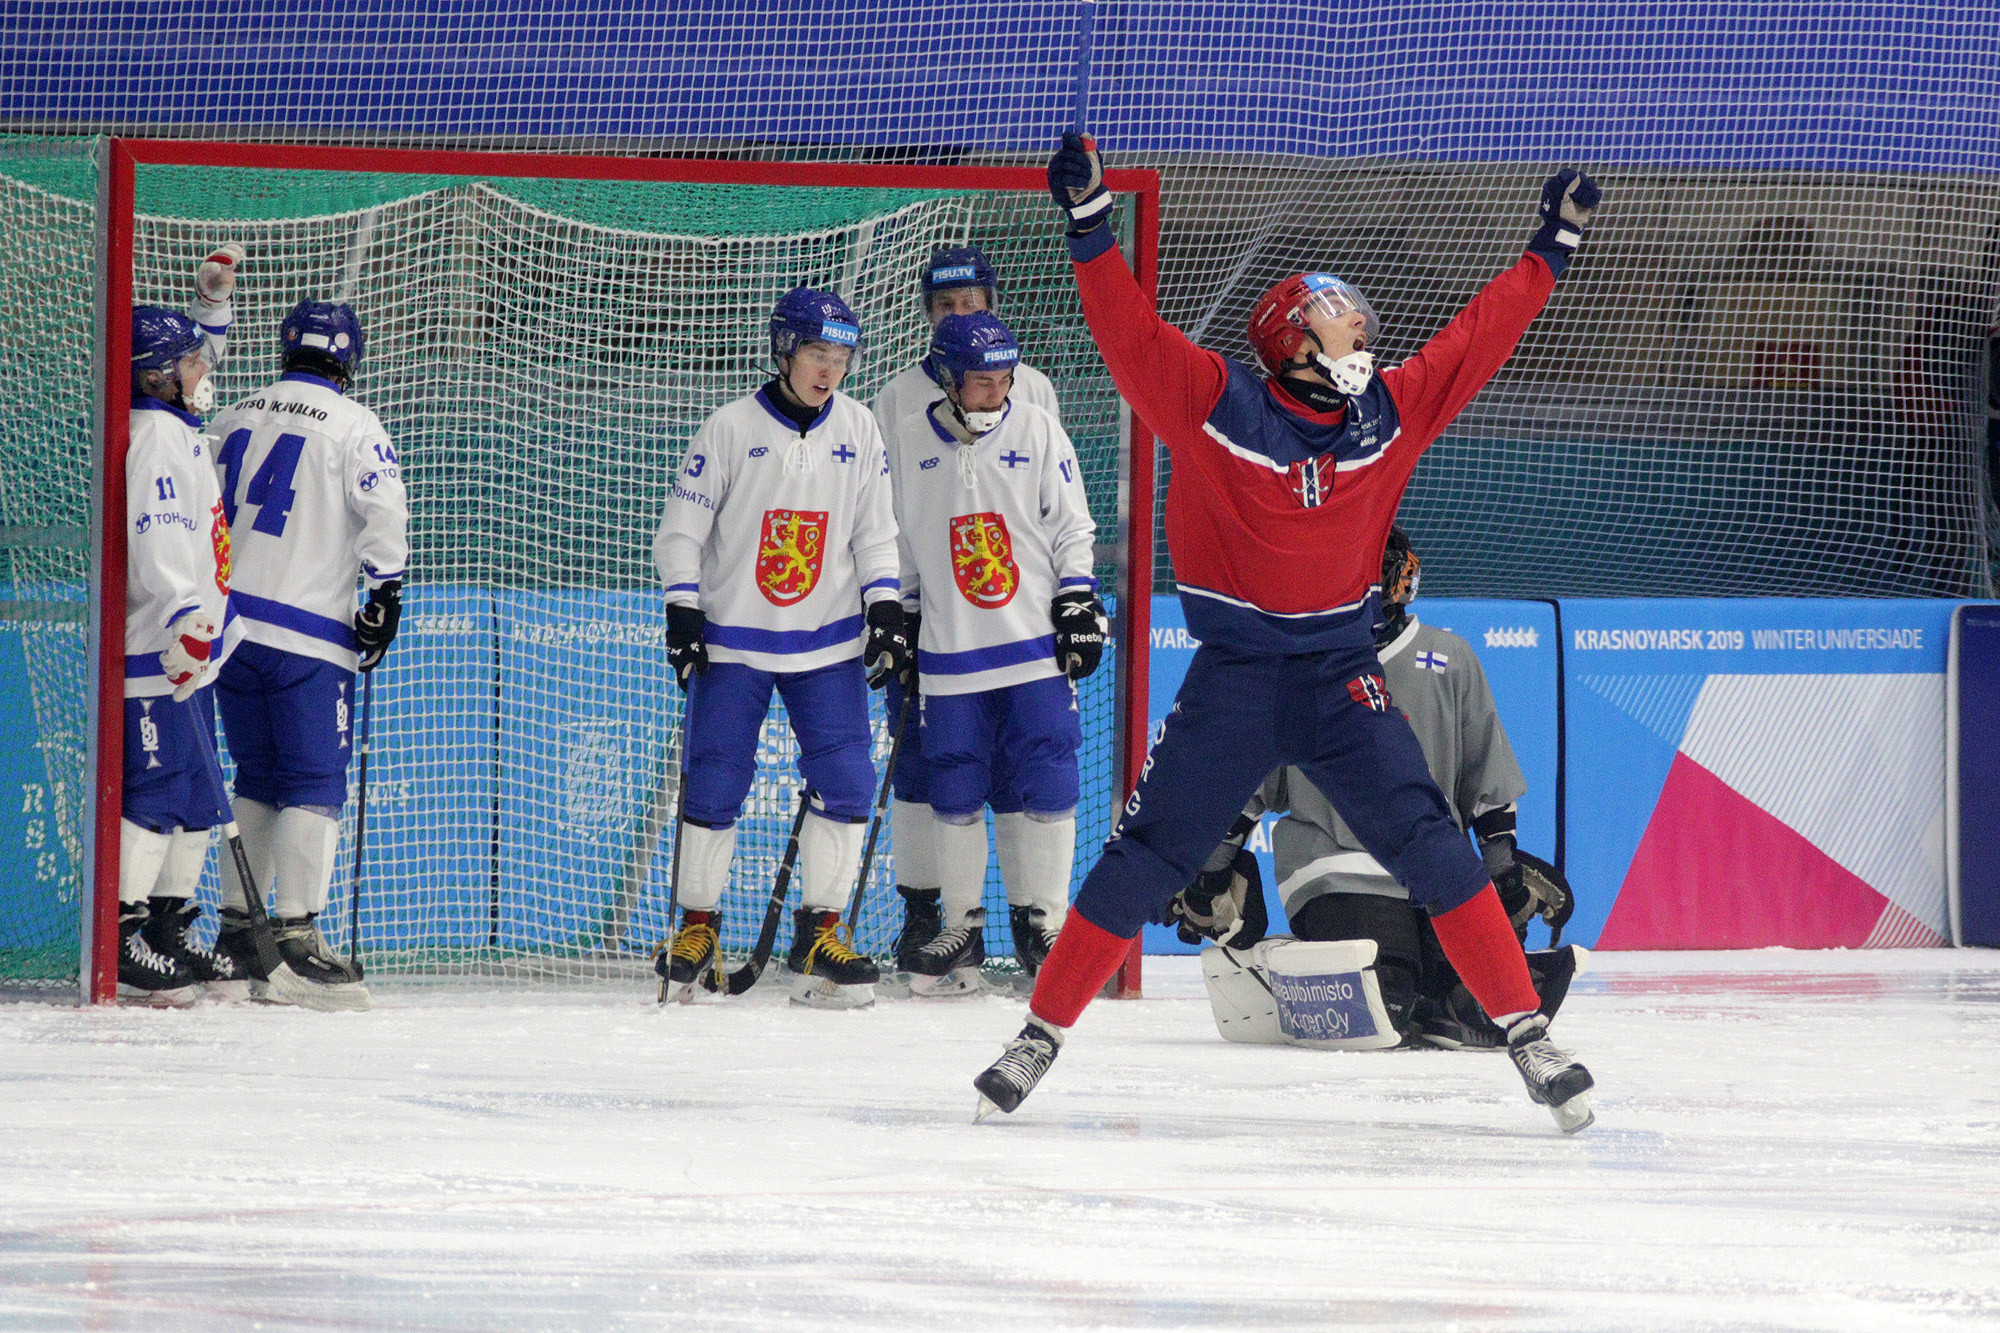 Norway took the bandy bronze medal following their victory against Finland ©Krasnoyarsk 2019